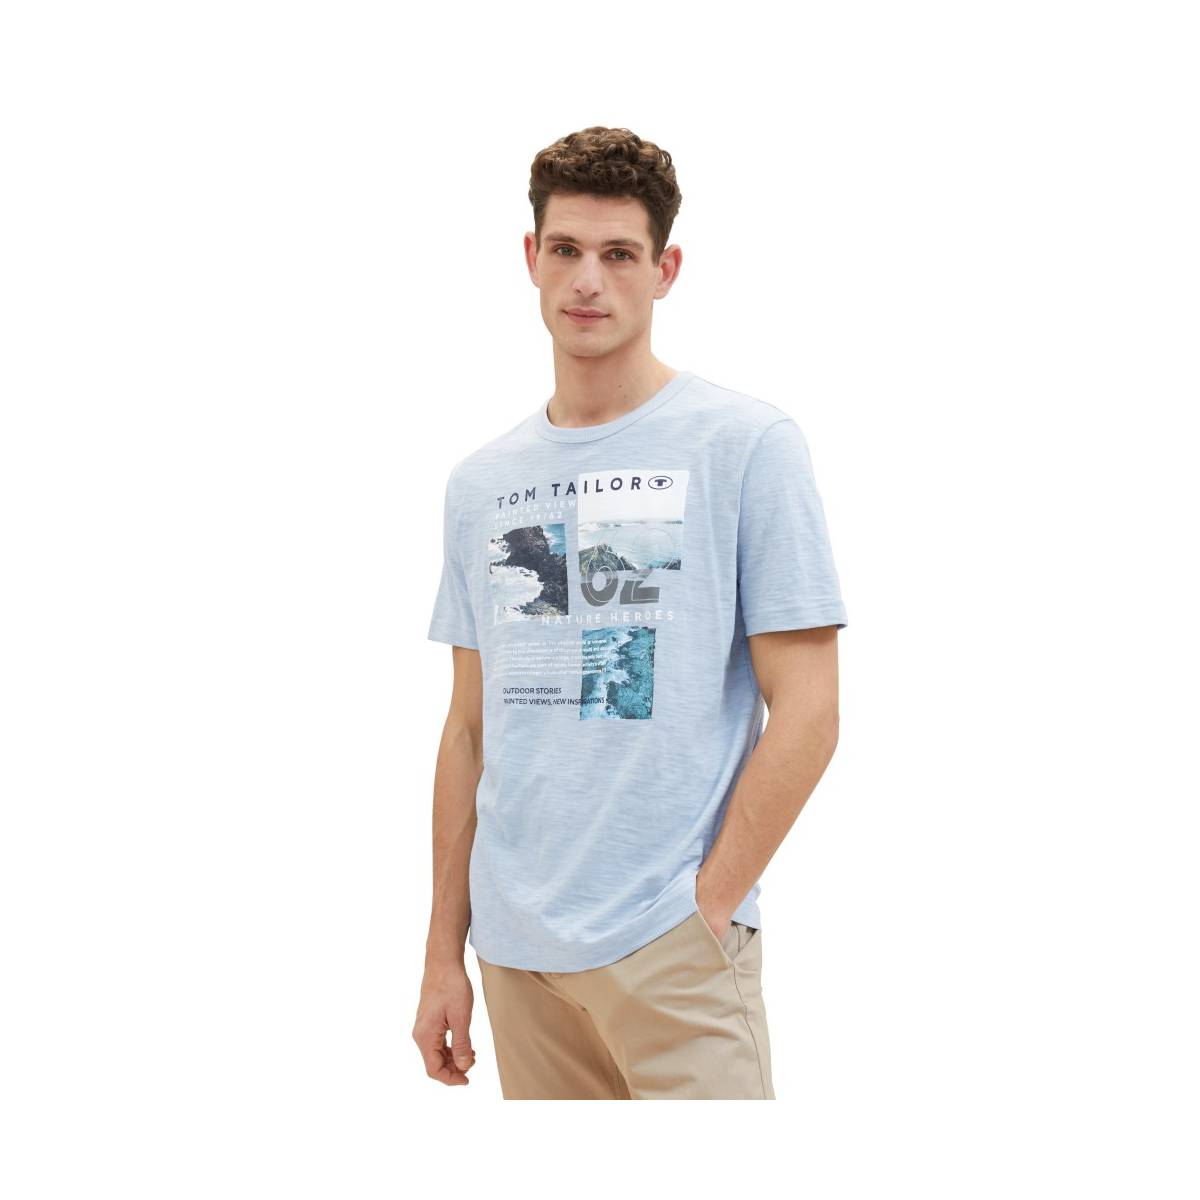 TOM TAILOR  t shirts licht blauw -  model 1040934 - Herenkleding t shirts blauw